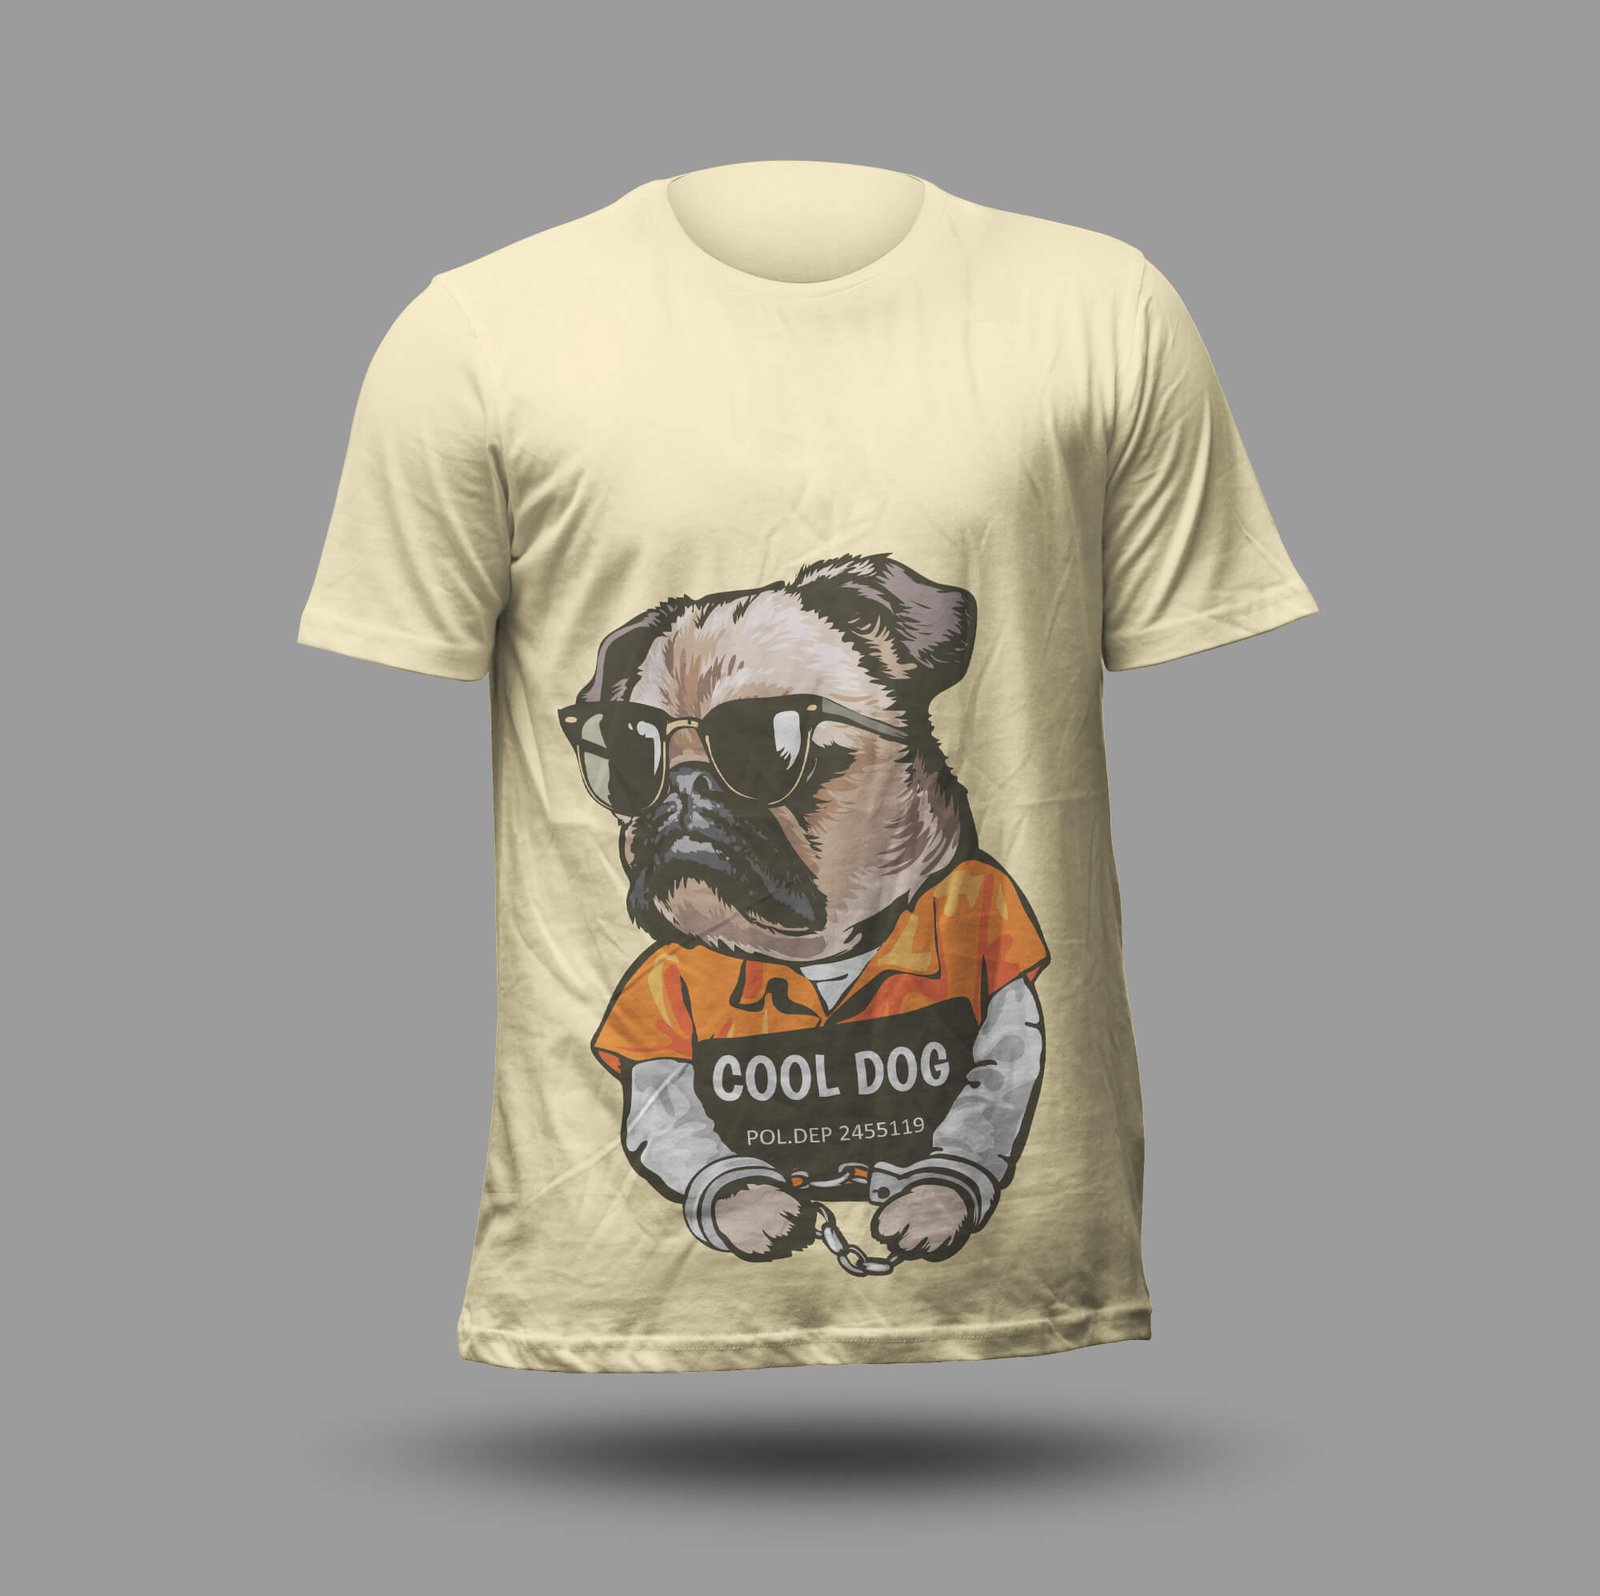 Free 3D T Shirt Mockup PSD Template - Mockup Den